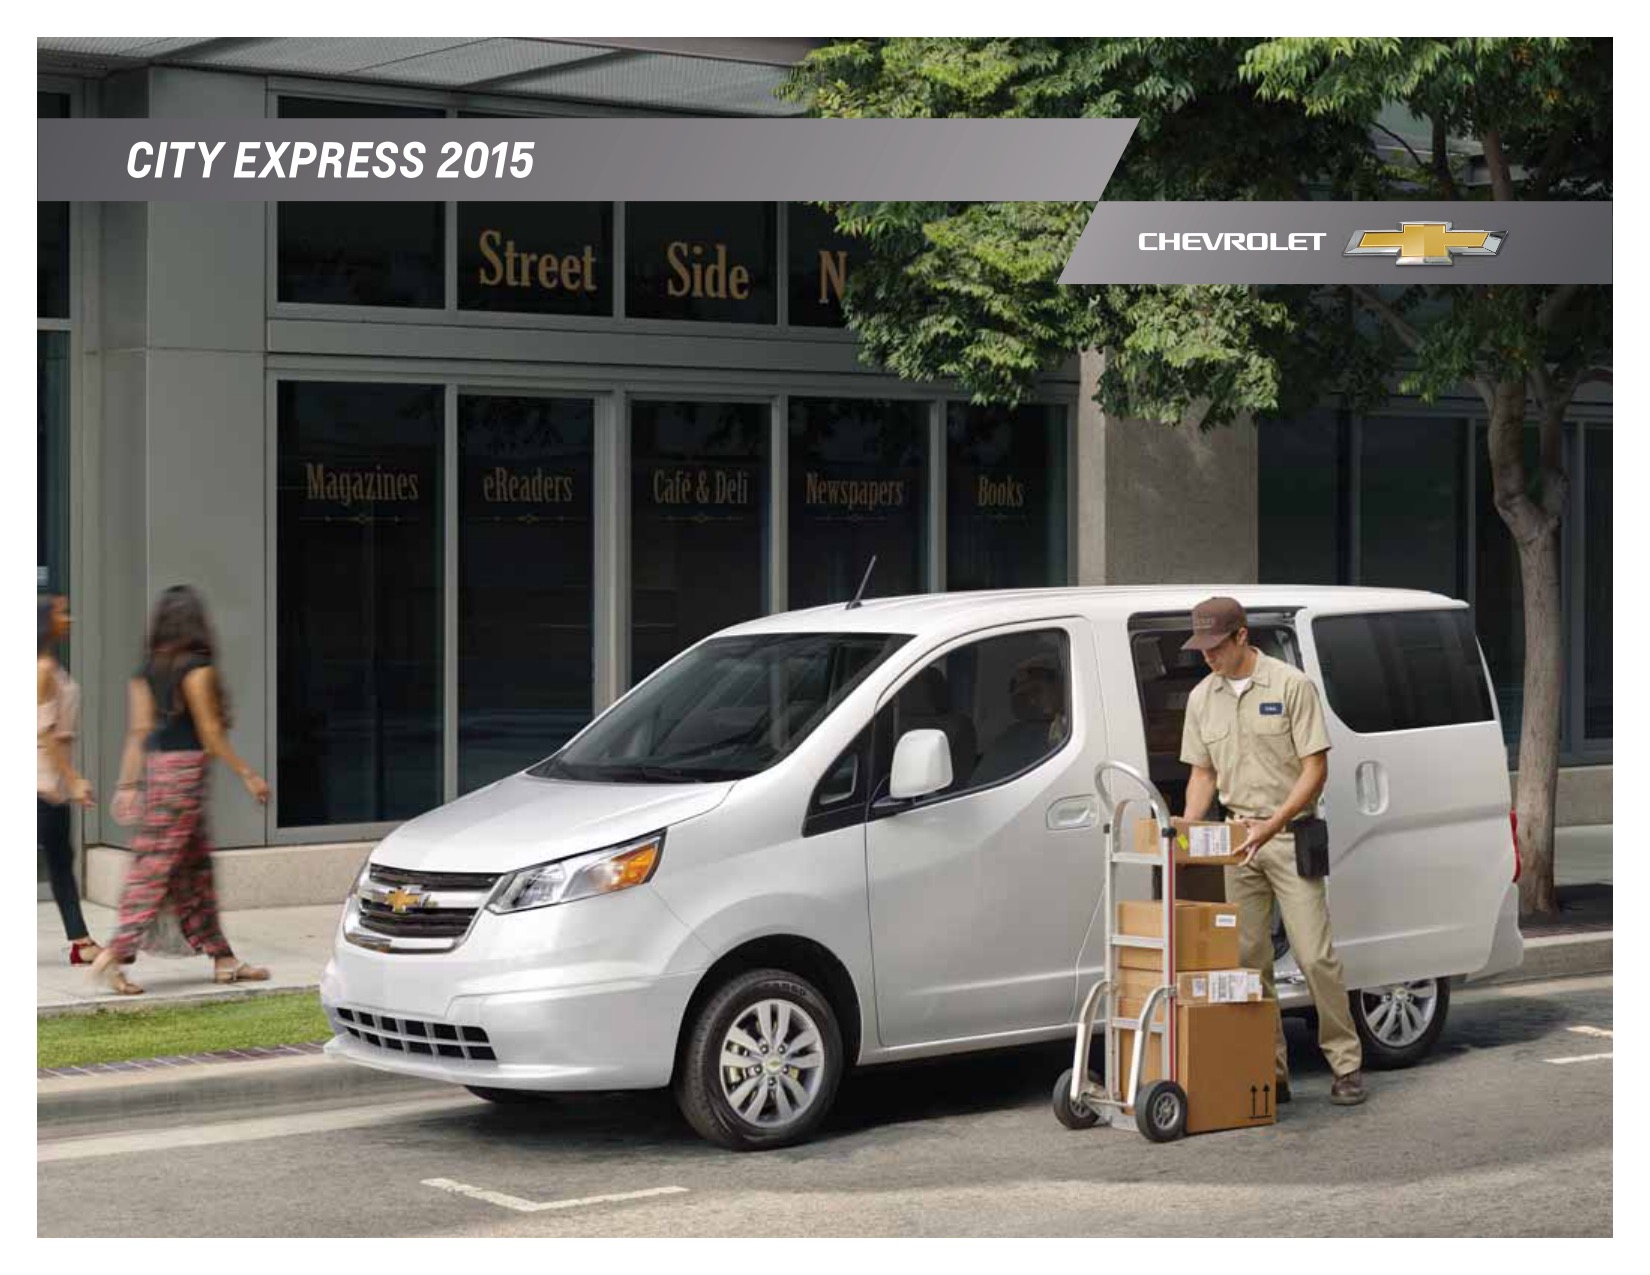 2015 Chevrolet City Express Brochure